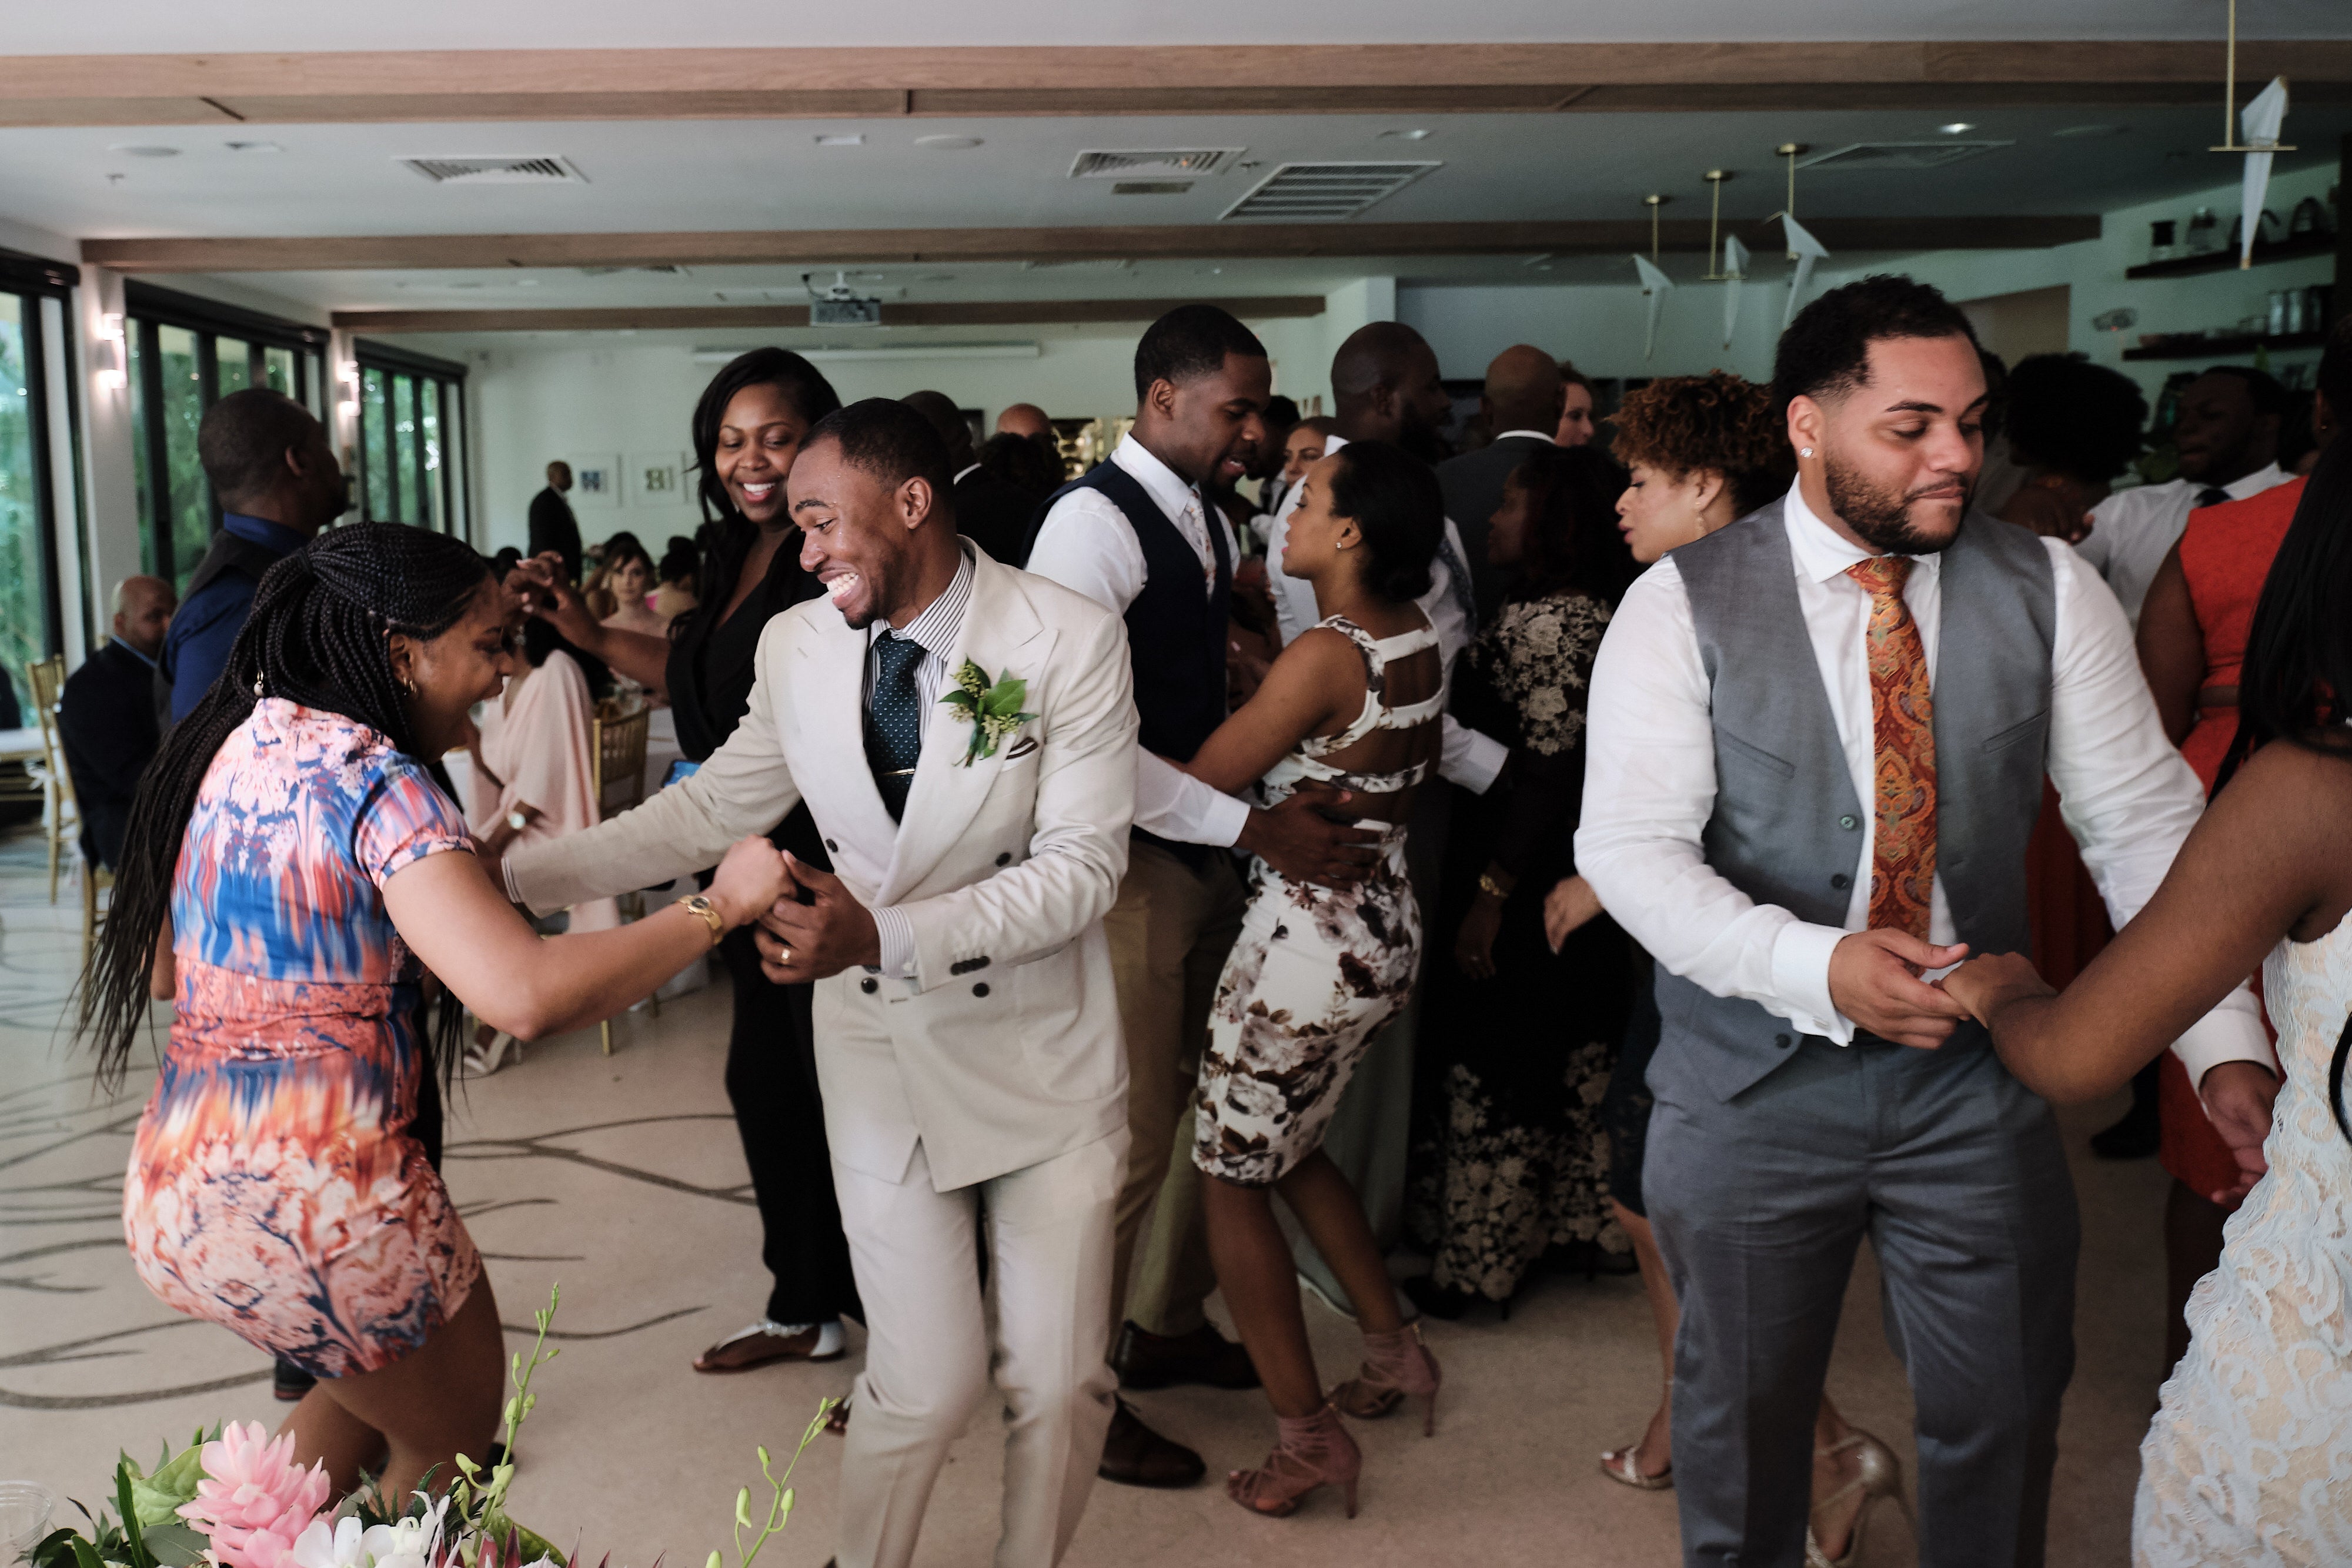 Bridal Bliss: Arielle and Steve’s Miami Wedding Photos